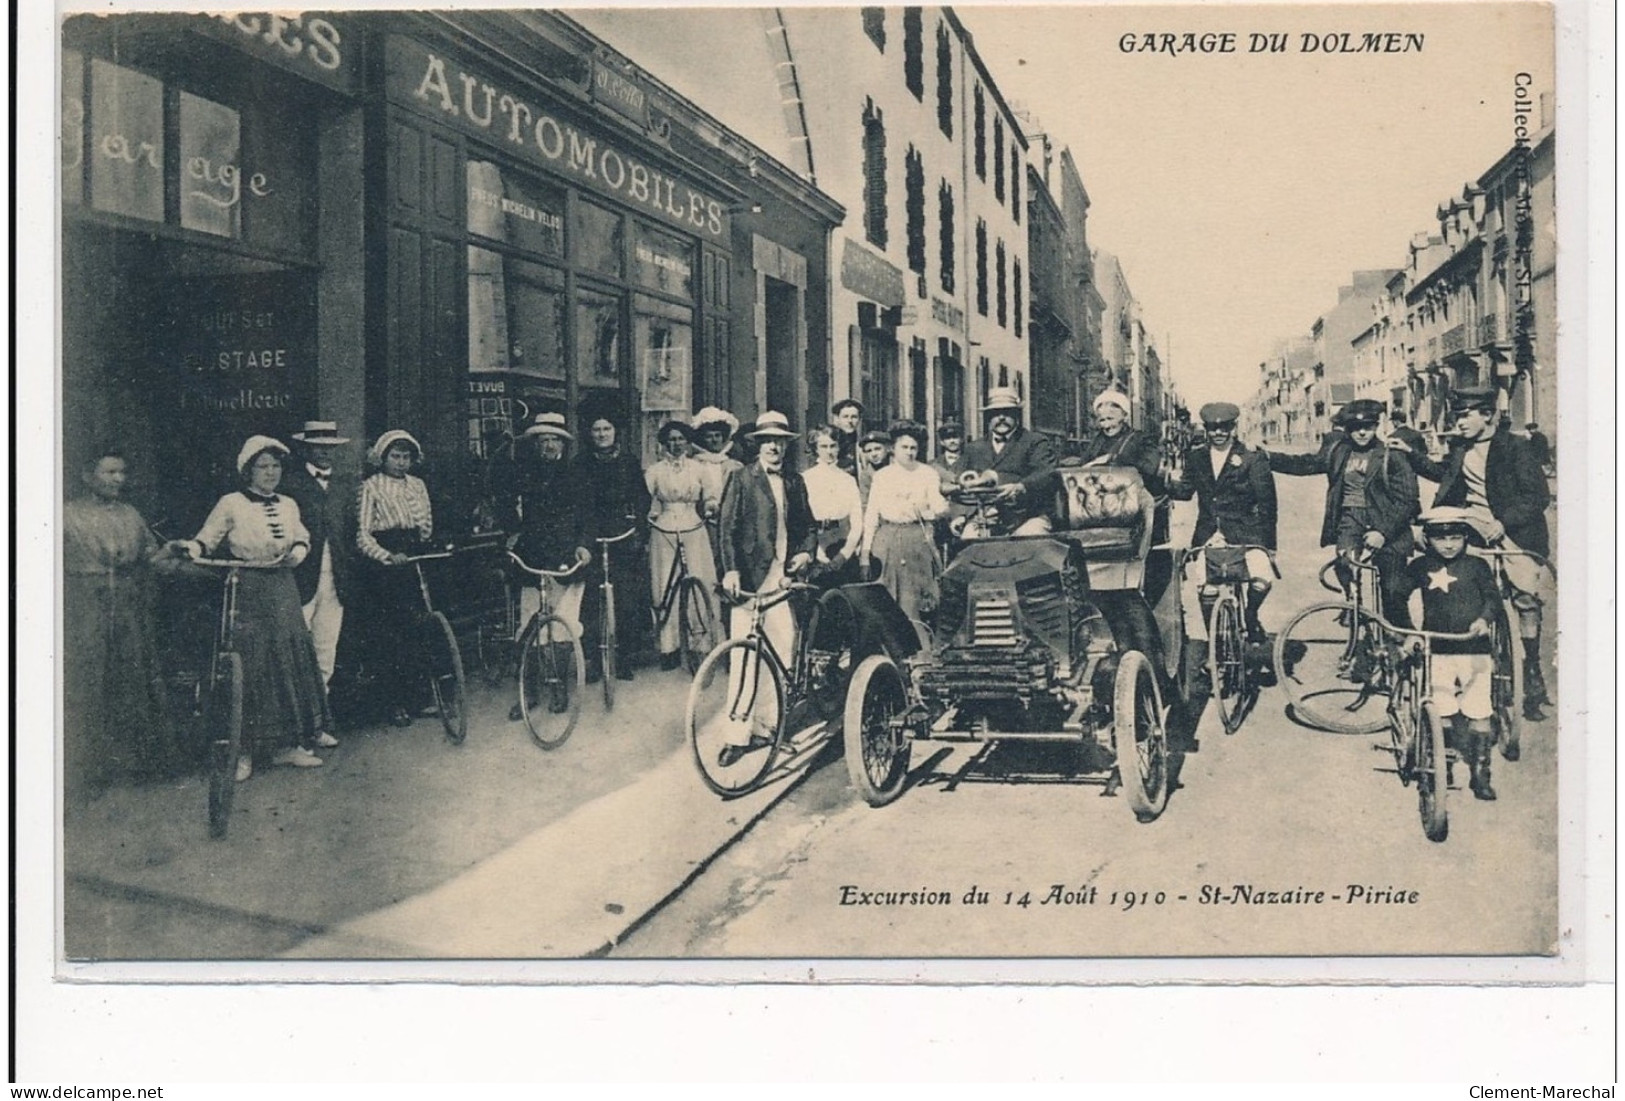 SAINT-NAZAIRE : Garage Du Dolmen, Excursion Du 14 Aout 1910 Saint-nazaire, Piriae - Tres Bon Etat - Saint Nazaire